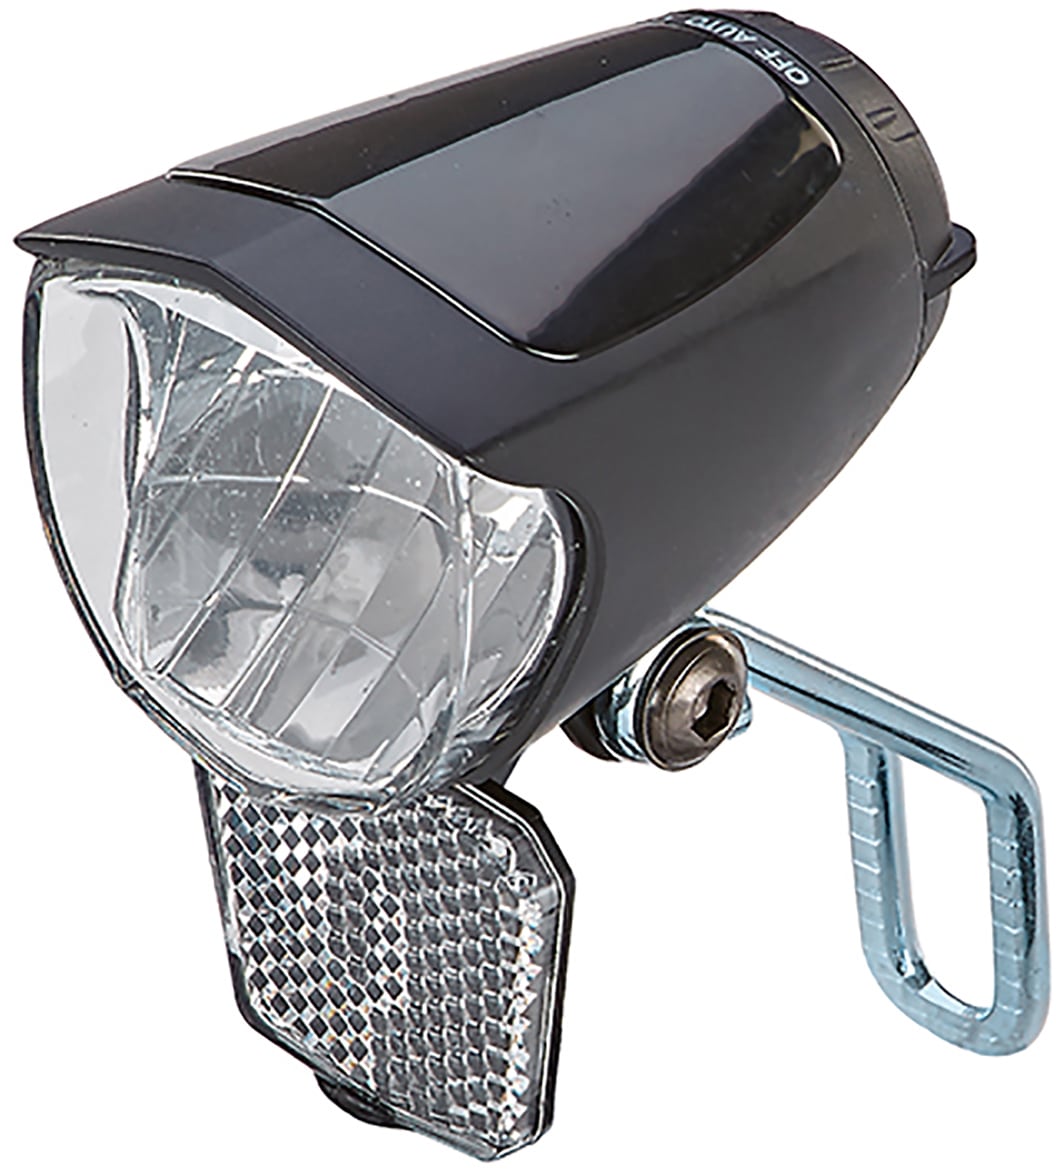 Prophete Fahrrad-Frontlicht »LED-Dynamoscheinwerfer 70 Lux«